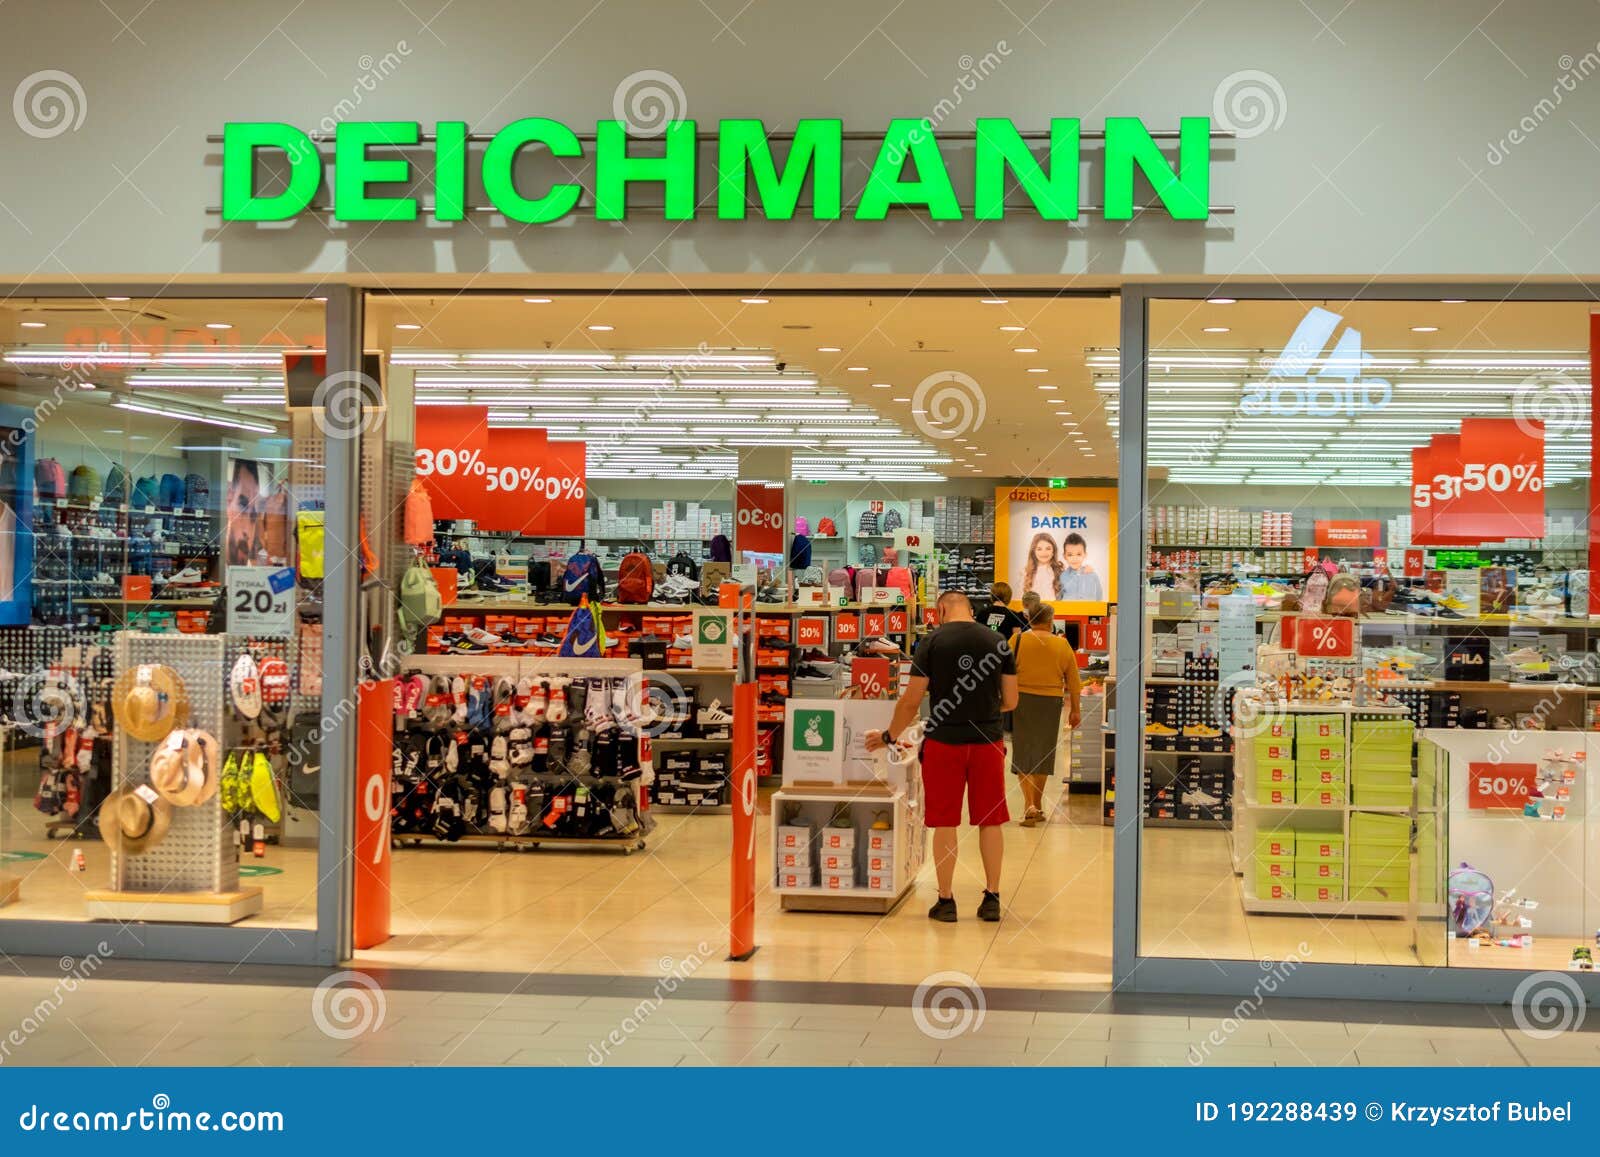 107 Deichmann Photos - Free & Royalty-Free Dreamstime